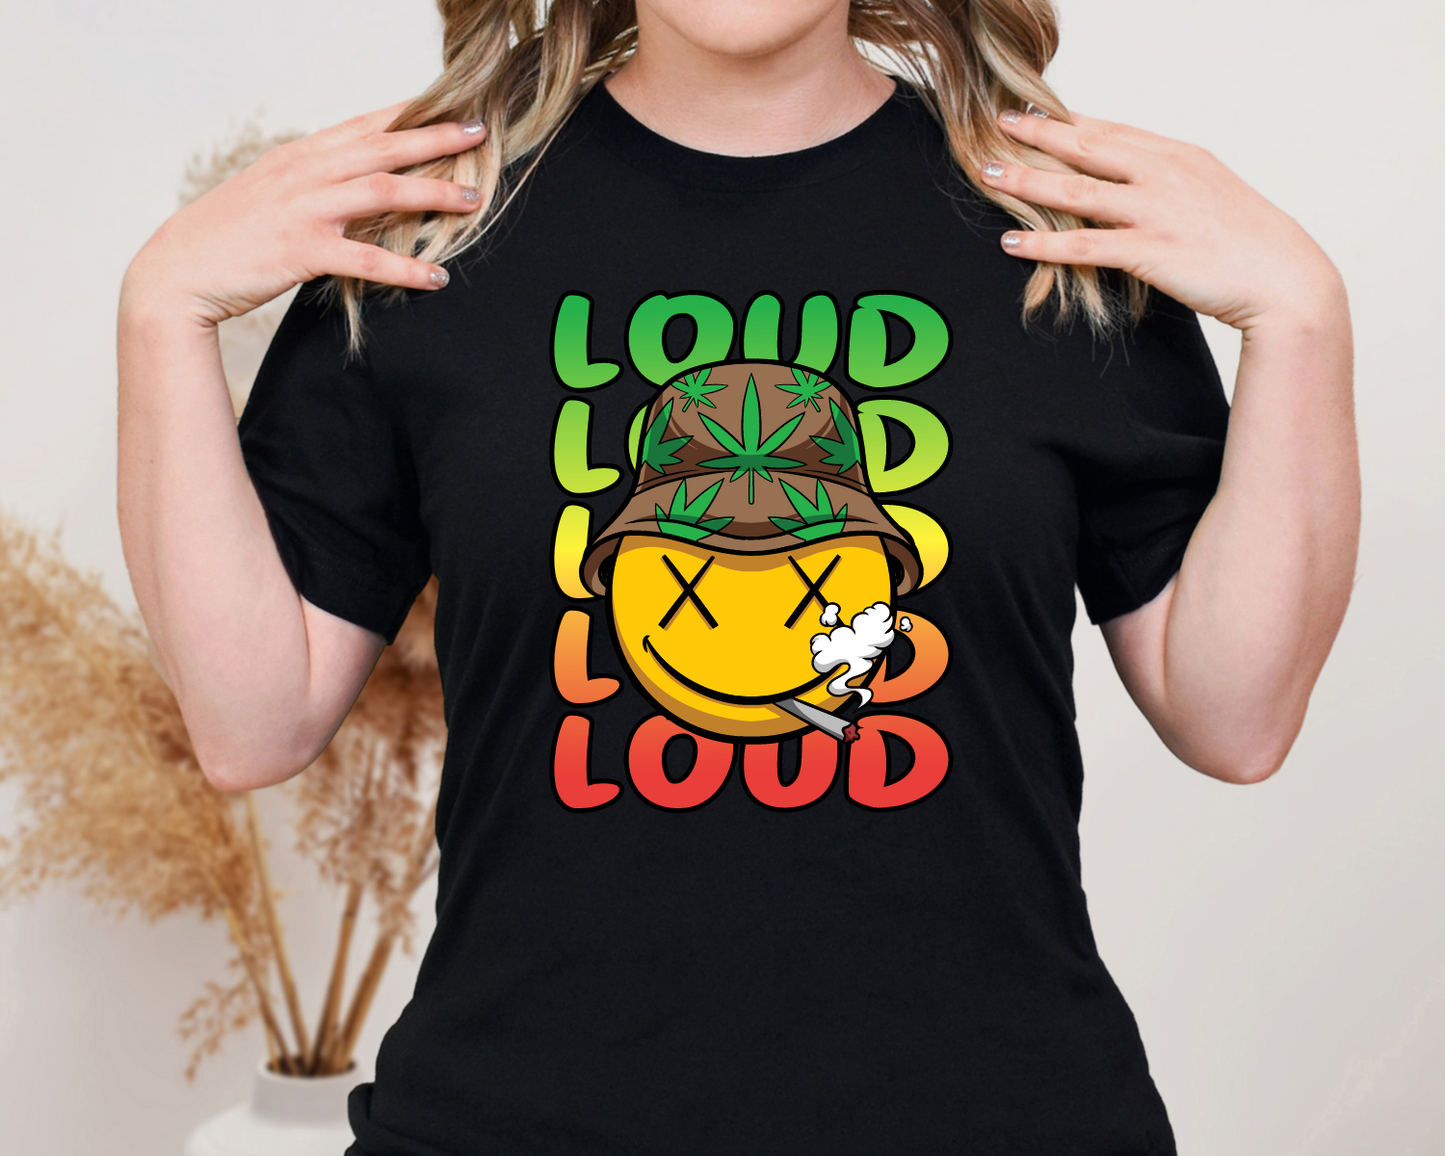 Cannabis T-Shirt Shirt Weed Tee Marijuana Funny 420 Hemp Leaf Pot Stoner Cotton